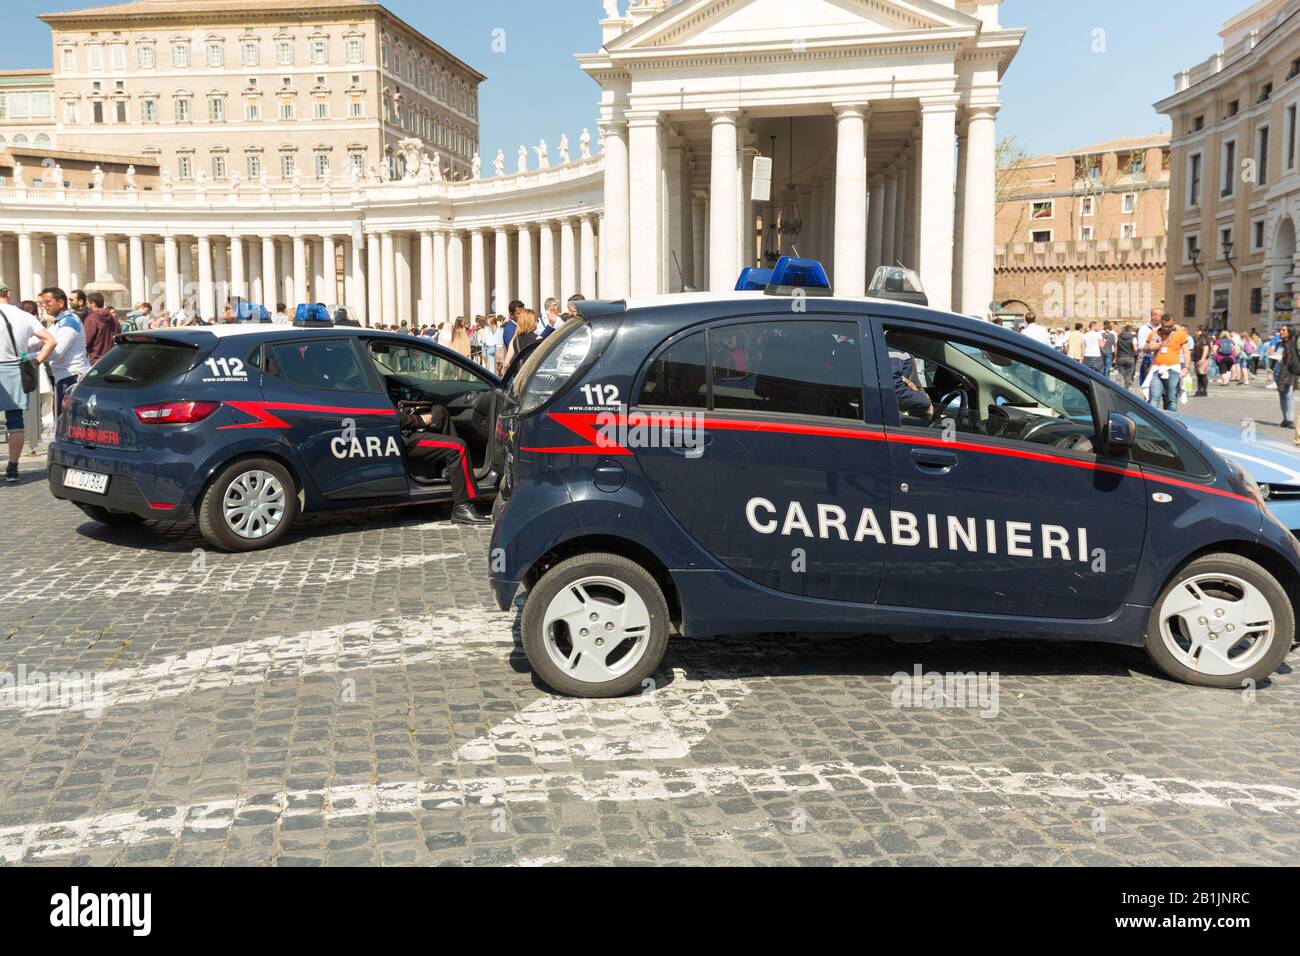 Carabinieri car at the Vatican in Rome, Italy Stock Photo